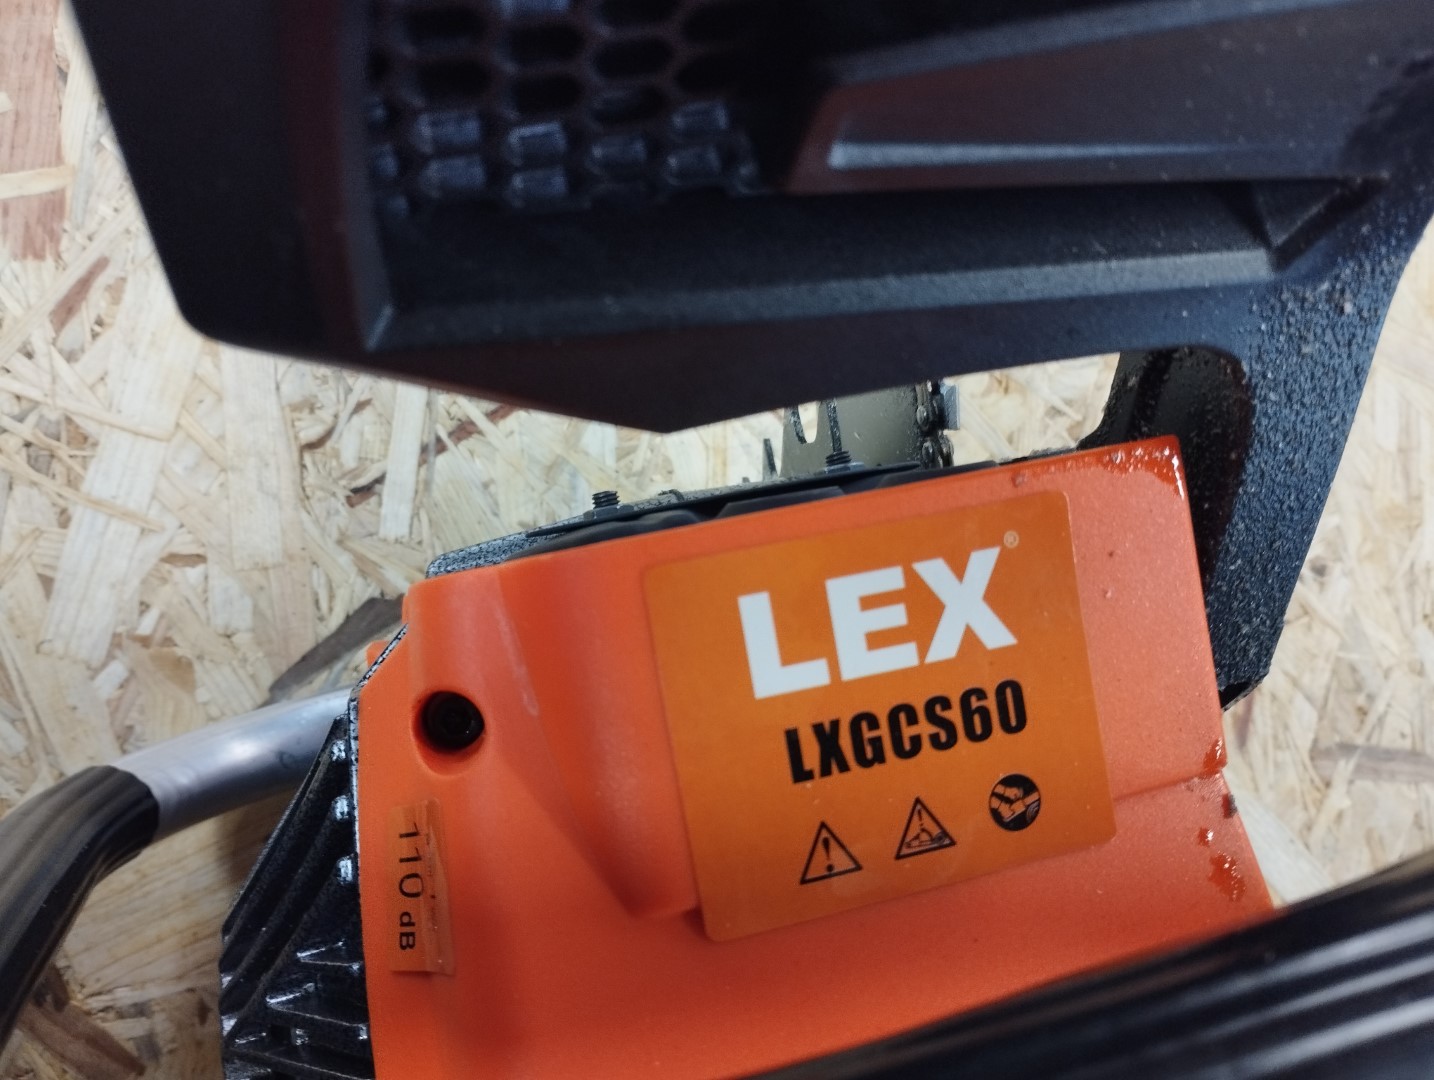 Lex LXGCS60